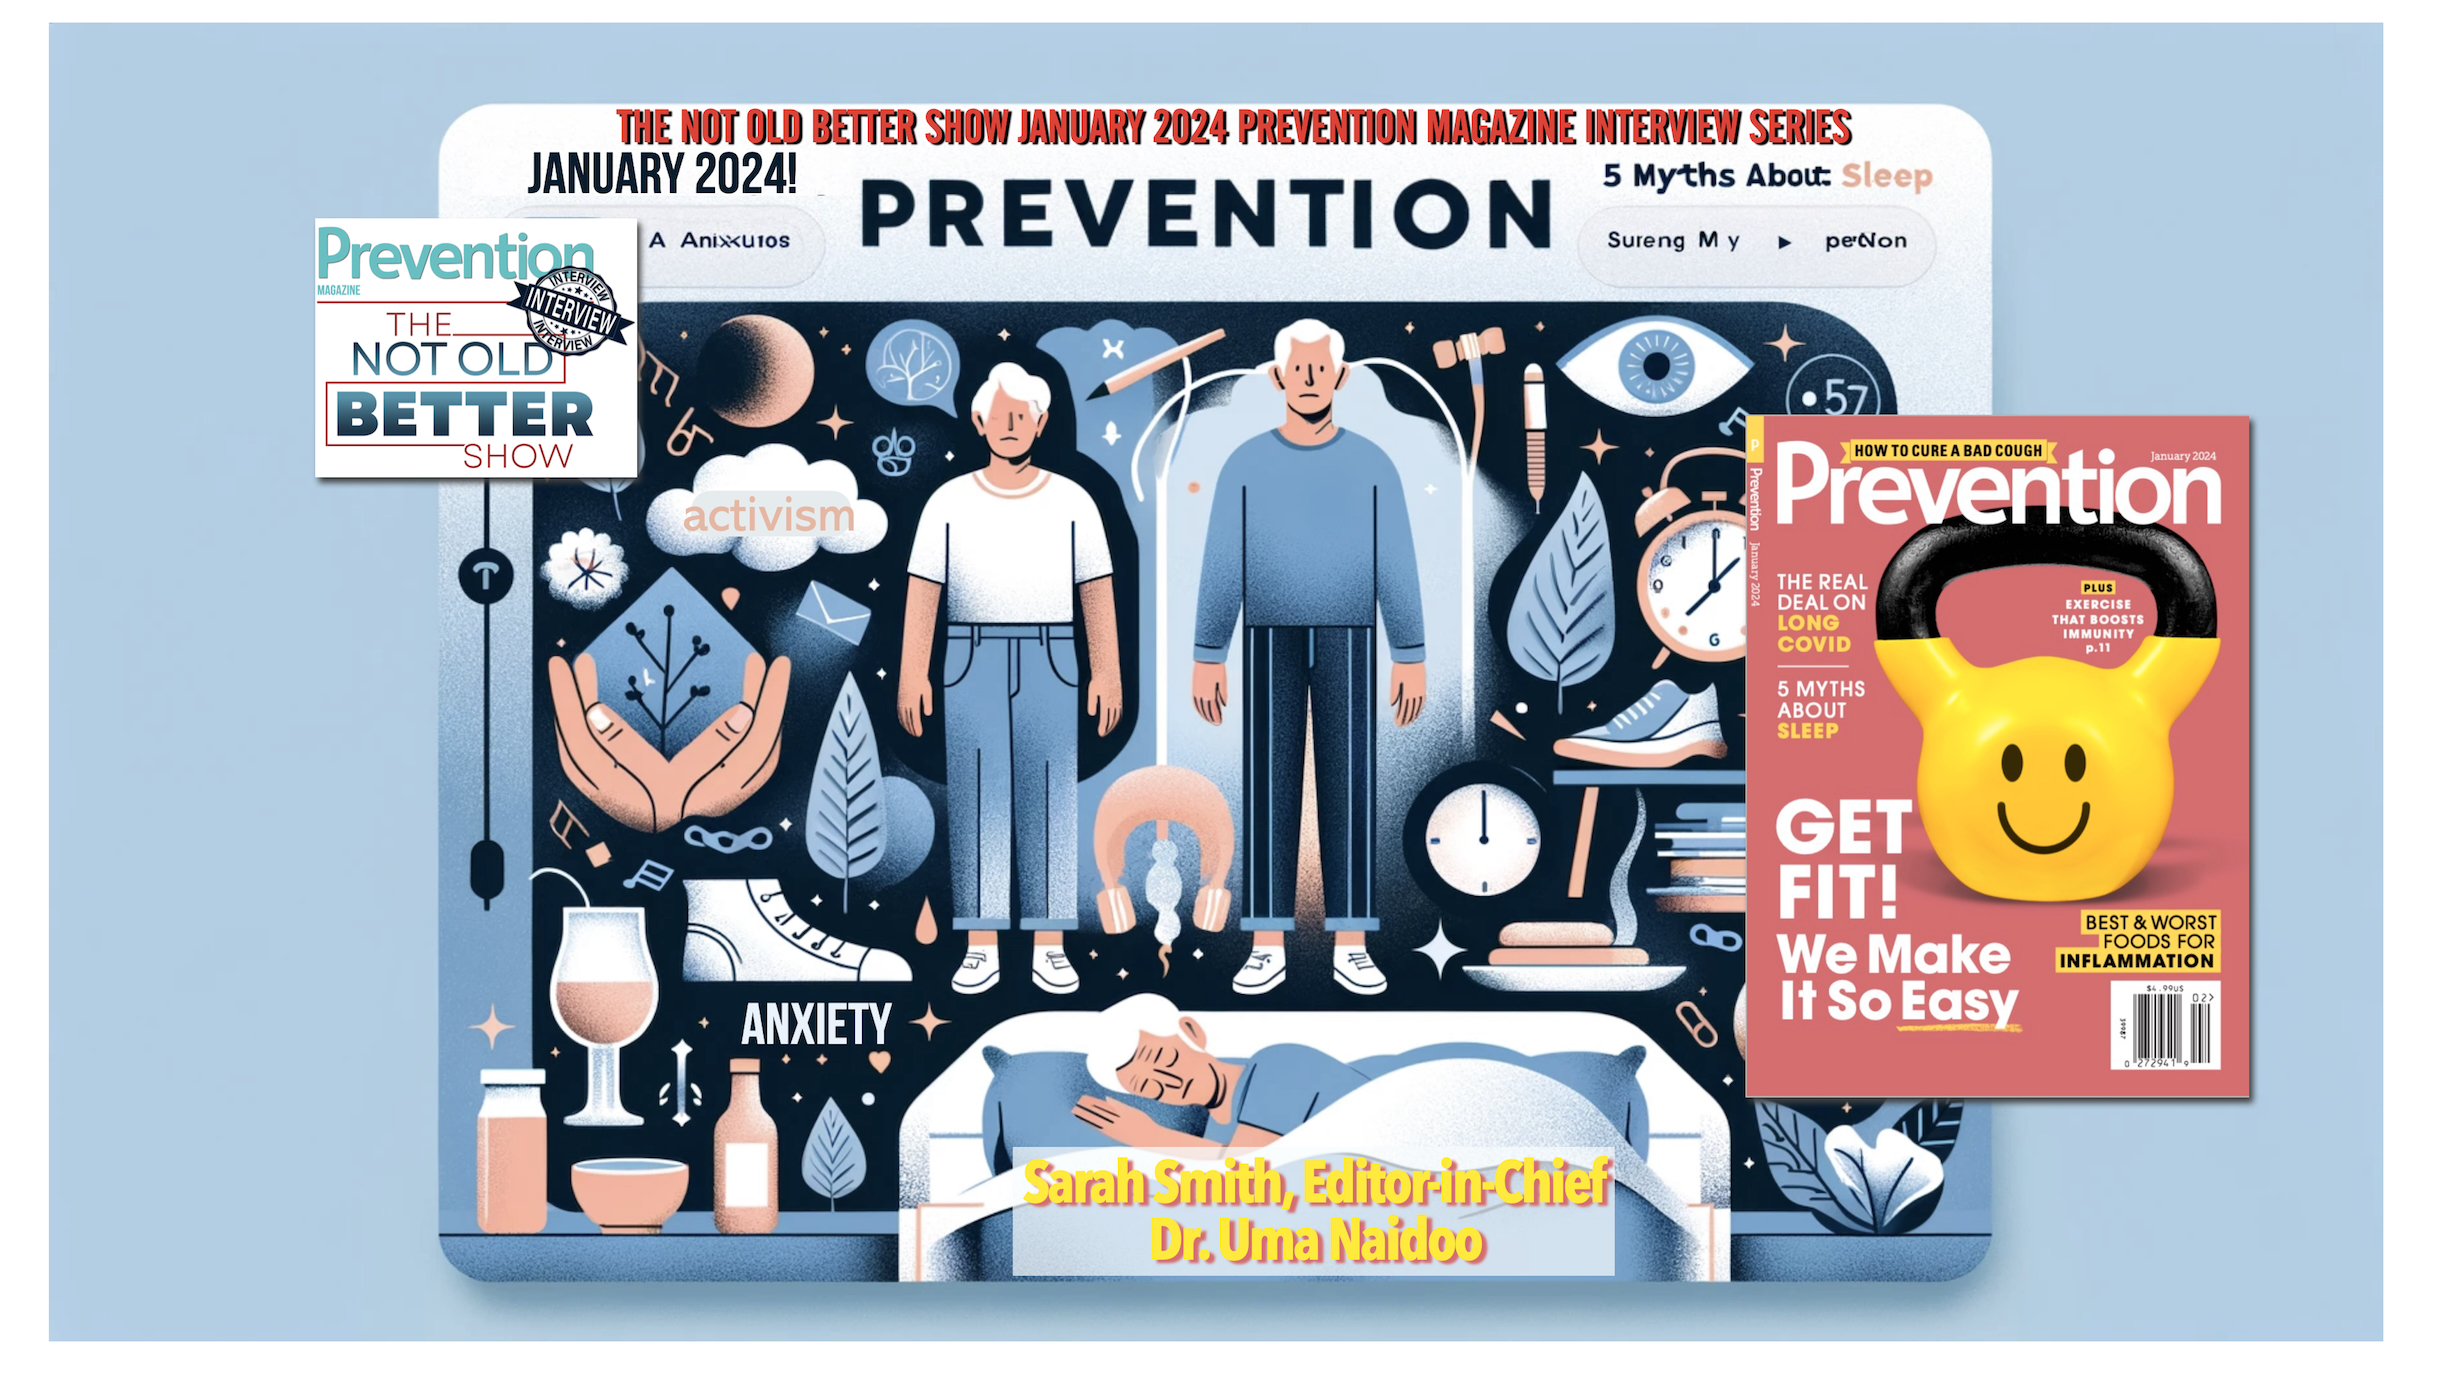 JANUARY PREVENTION MAGAZINE: Golden Wisdom: Health & Wellness Insights for the Ageless Spirit